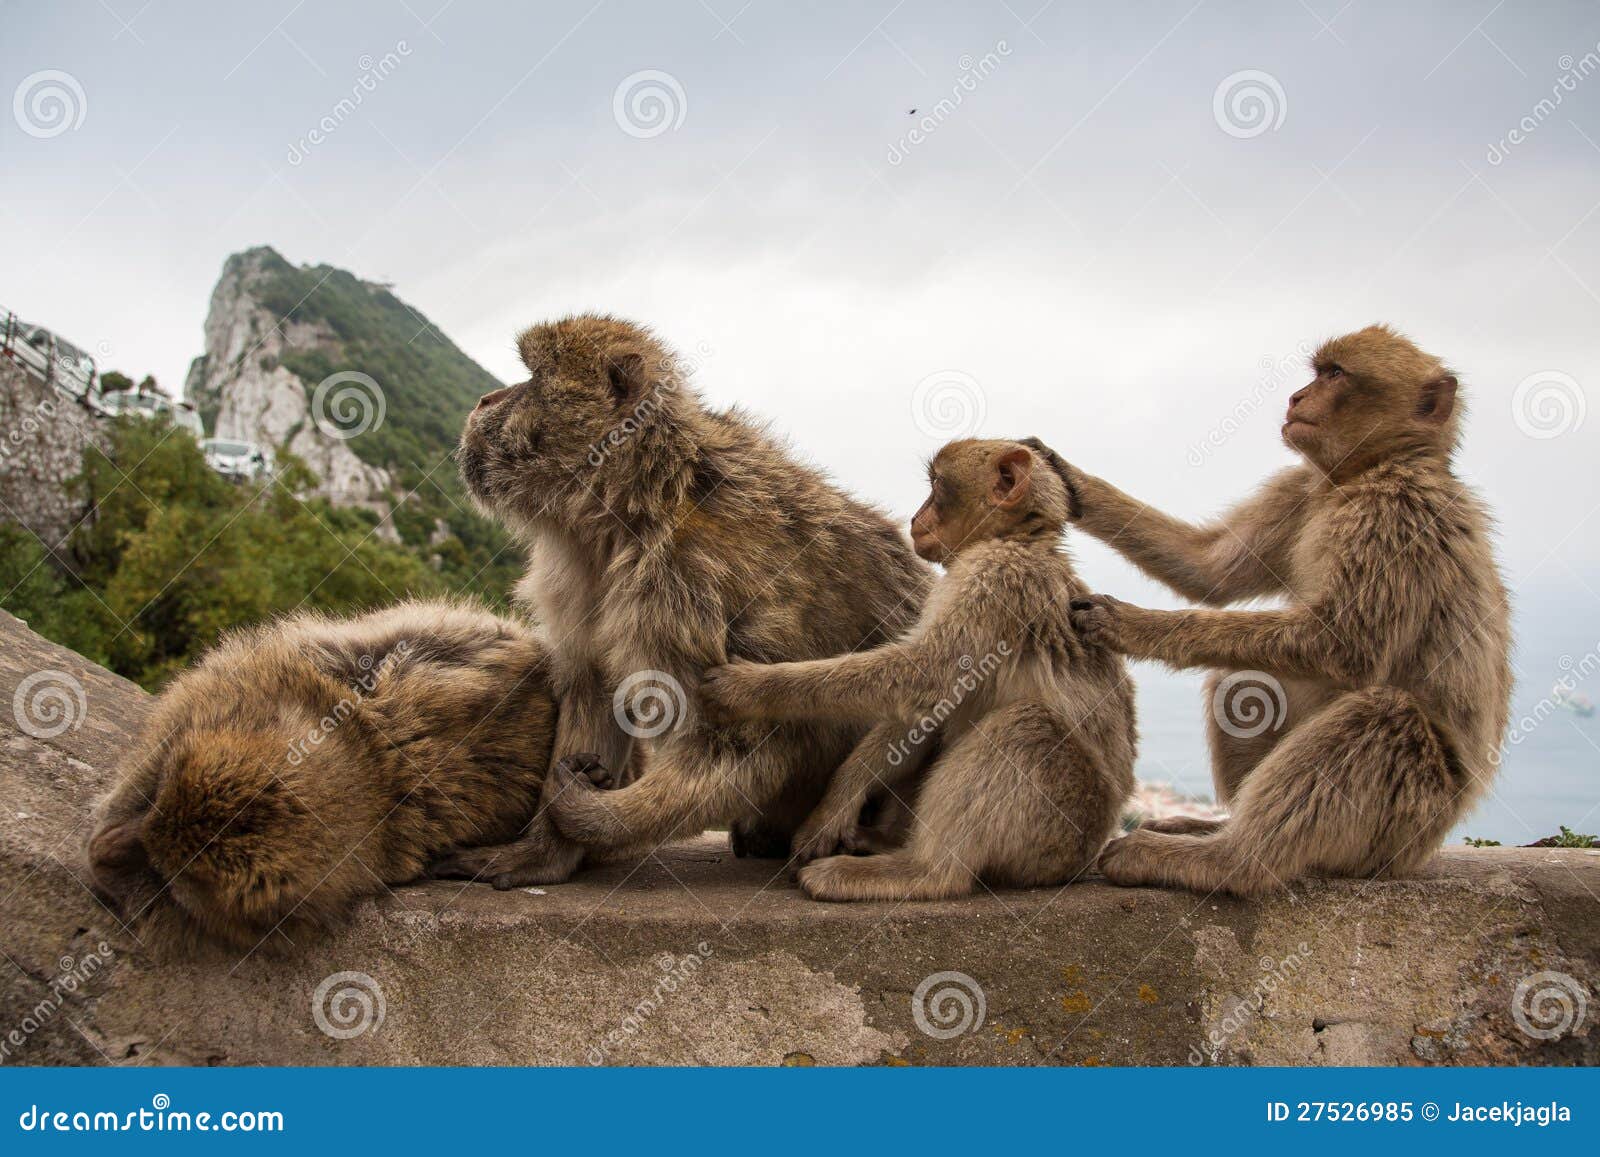 apes of gibraltar